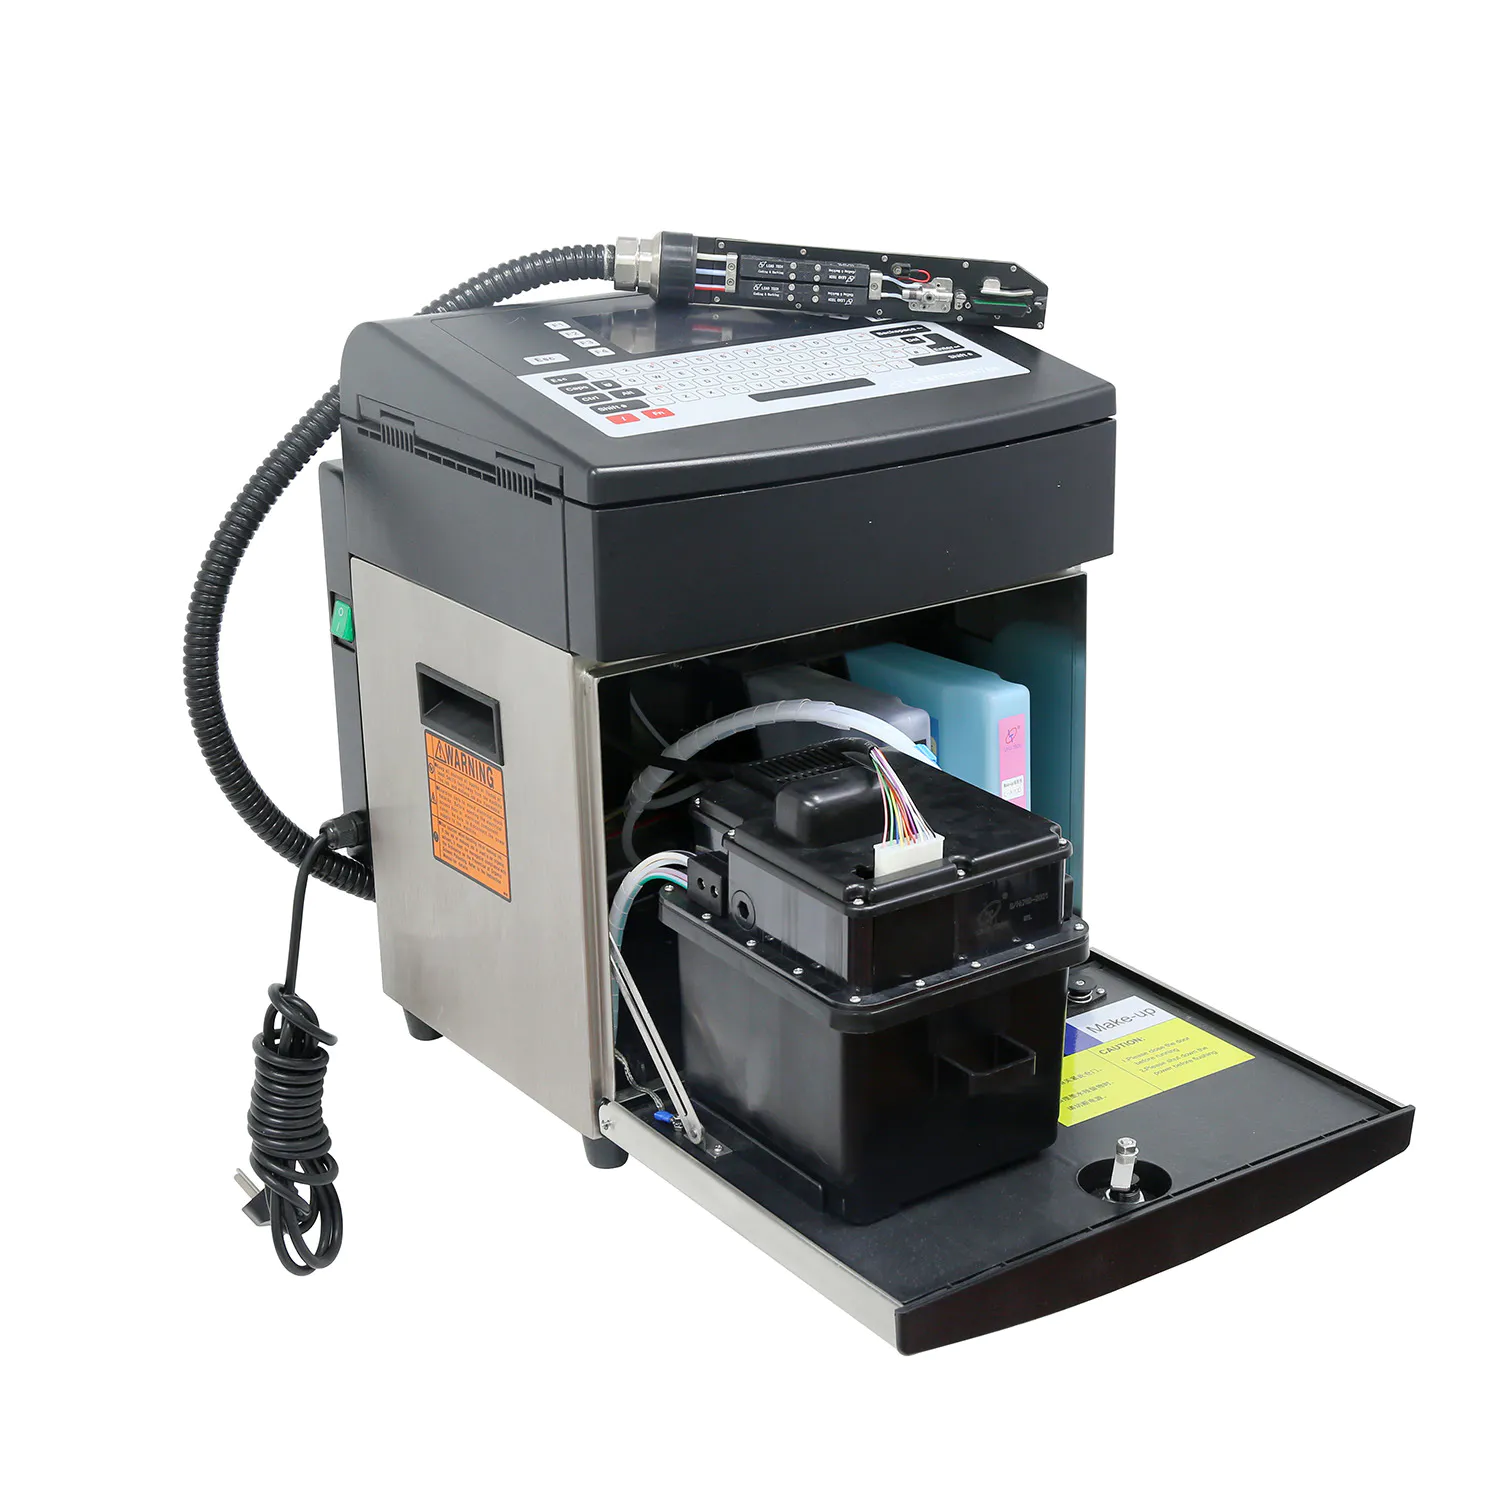 Leadtech Lt760 Numbering Printing Machines Jet Printer